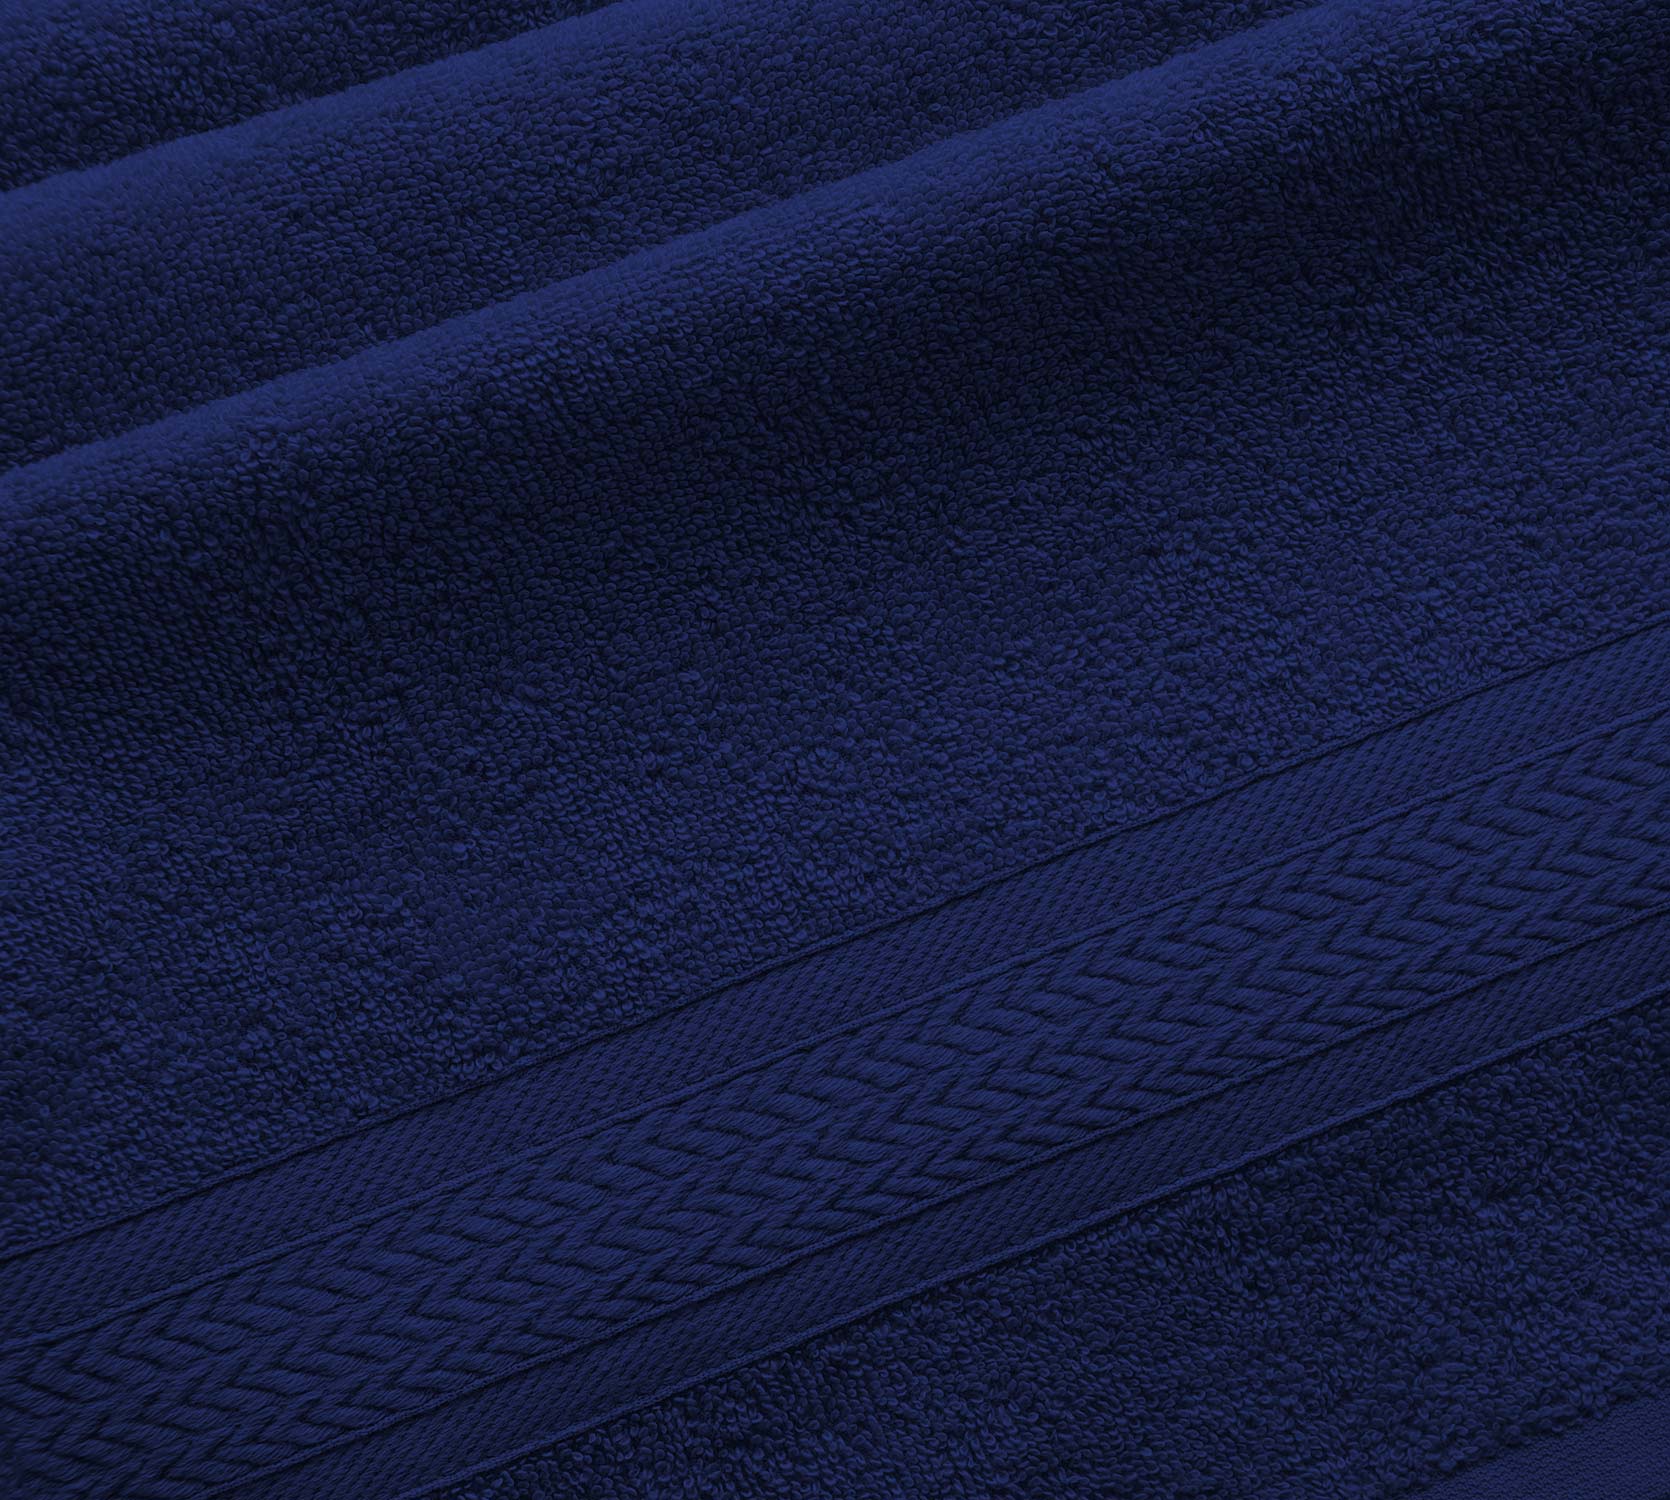 Постельное белье Полотенце махровое банное 70х140, Утро темно-синий  фото